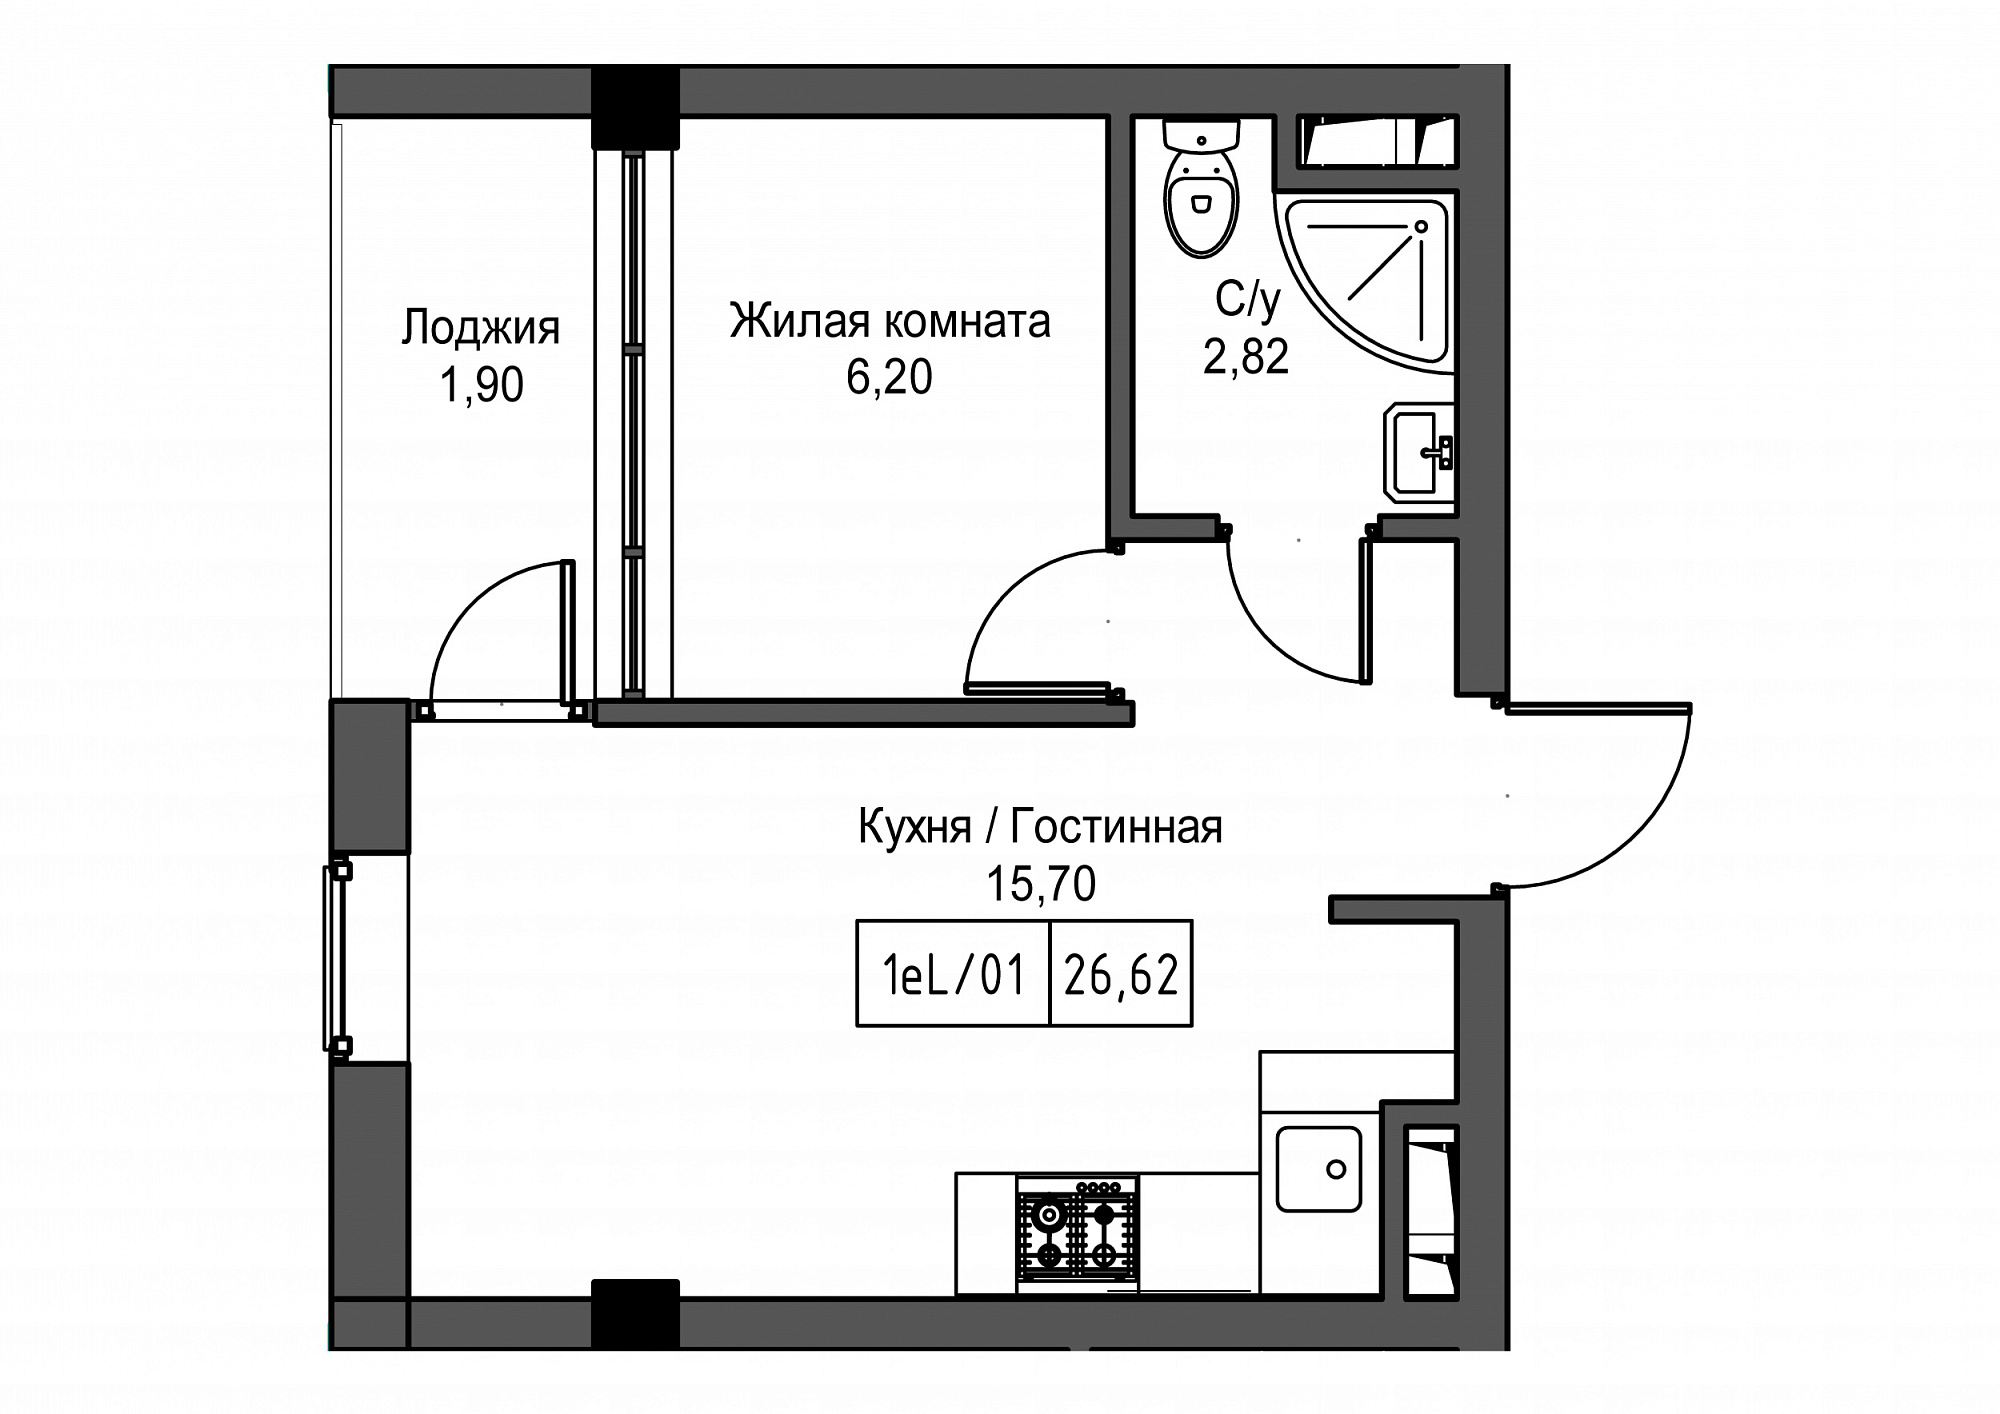 Planning 1-rm flats area 26.62m2, UM-002-02/0097.